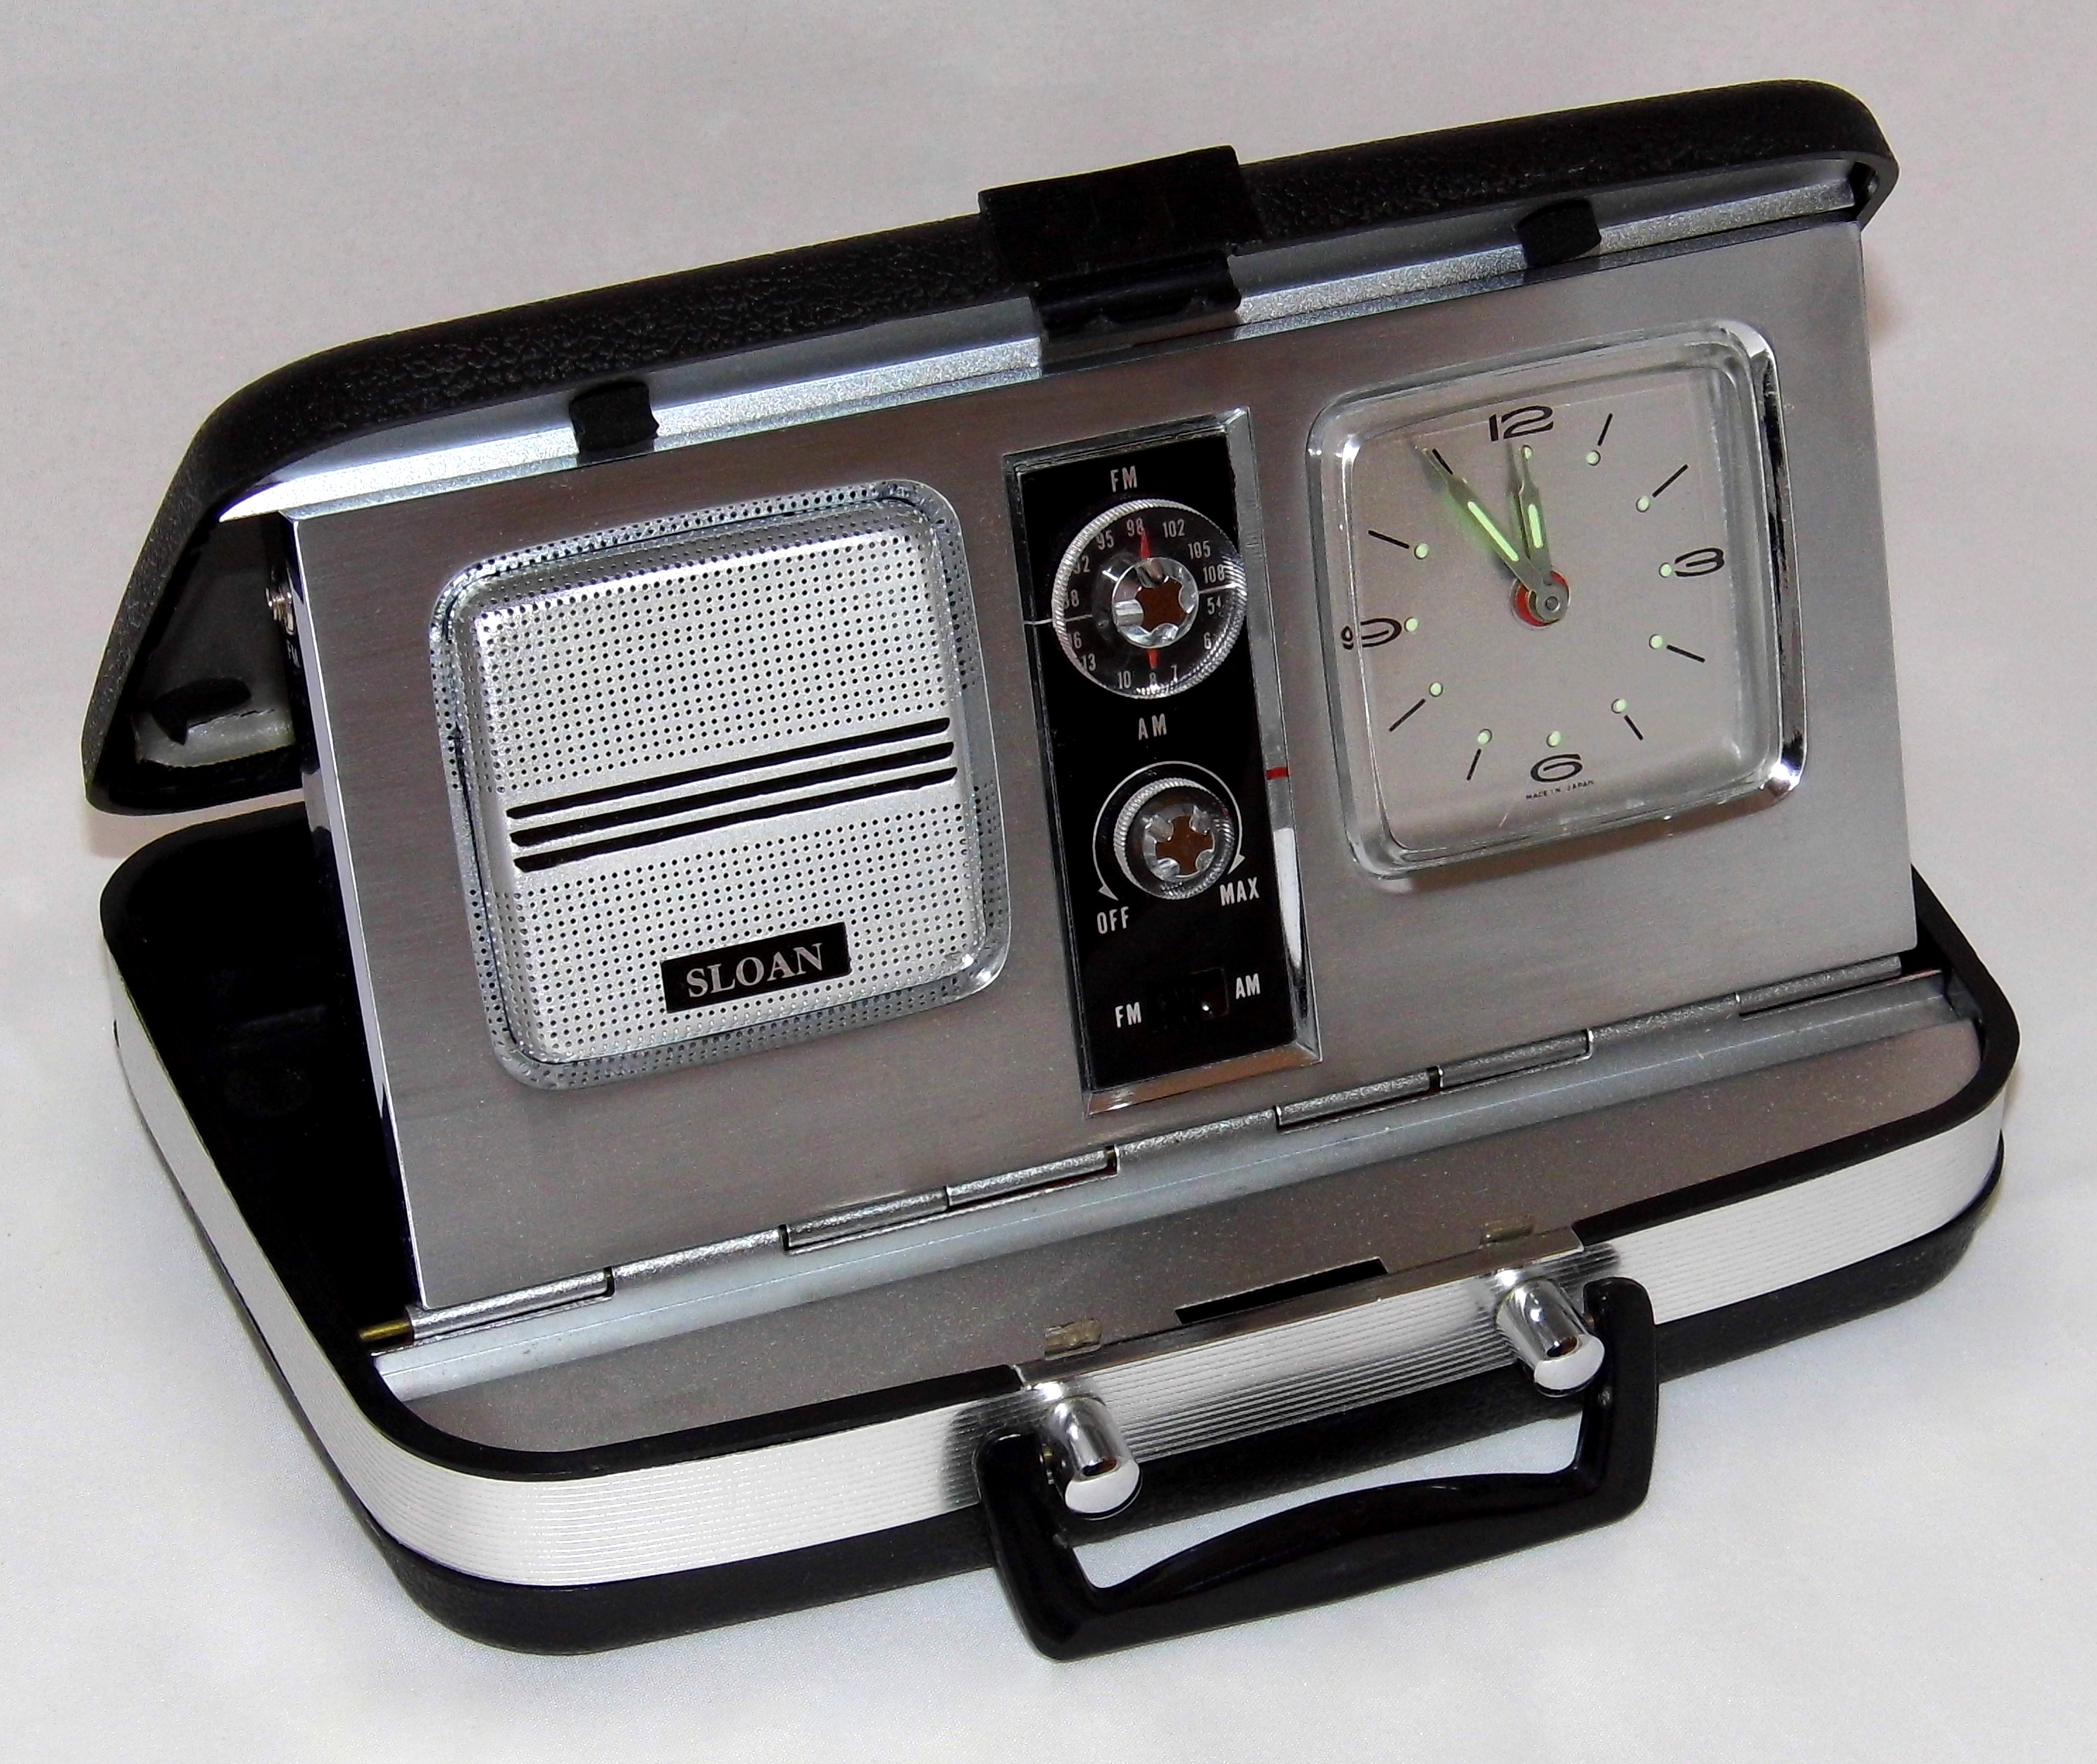 File:Vintage Sloan (Aimor) Travel Clock Radio, Model 2356, AM-FM Bands,  Mechanical Wind Clock, Made In Japan, Circa 1974 (33745785623).jpg -  Wikimedia Commons